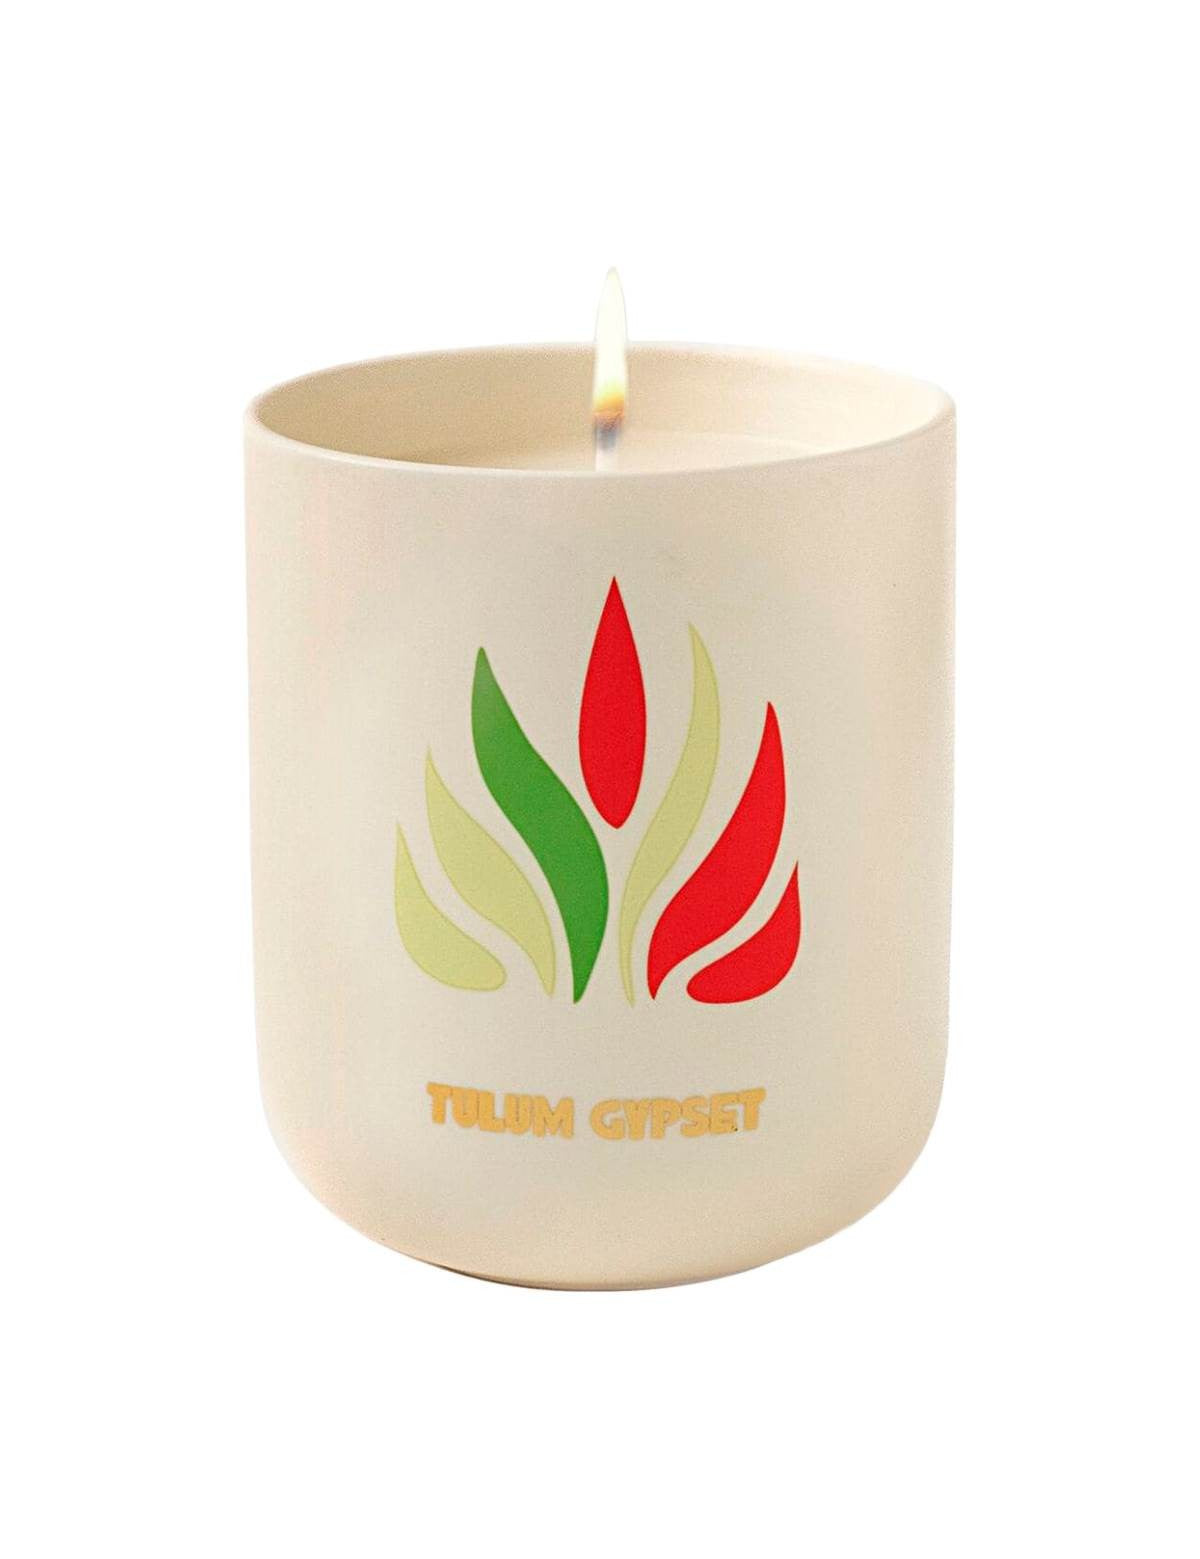 assouline-tulum-gypset-scented-candle.jpg